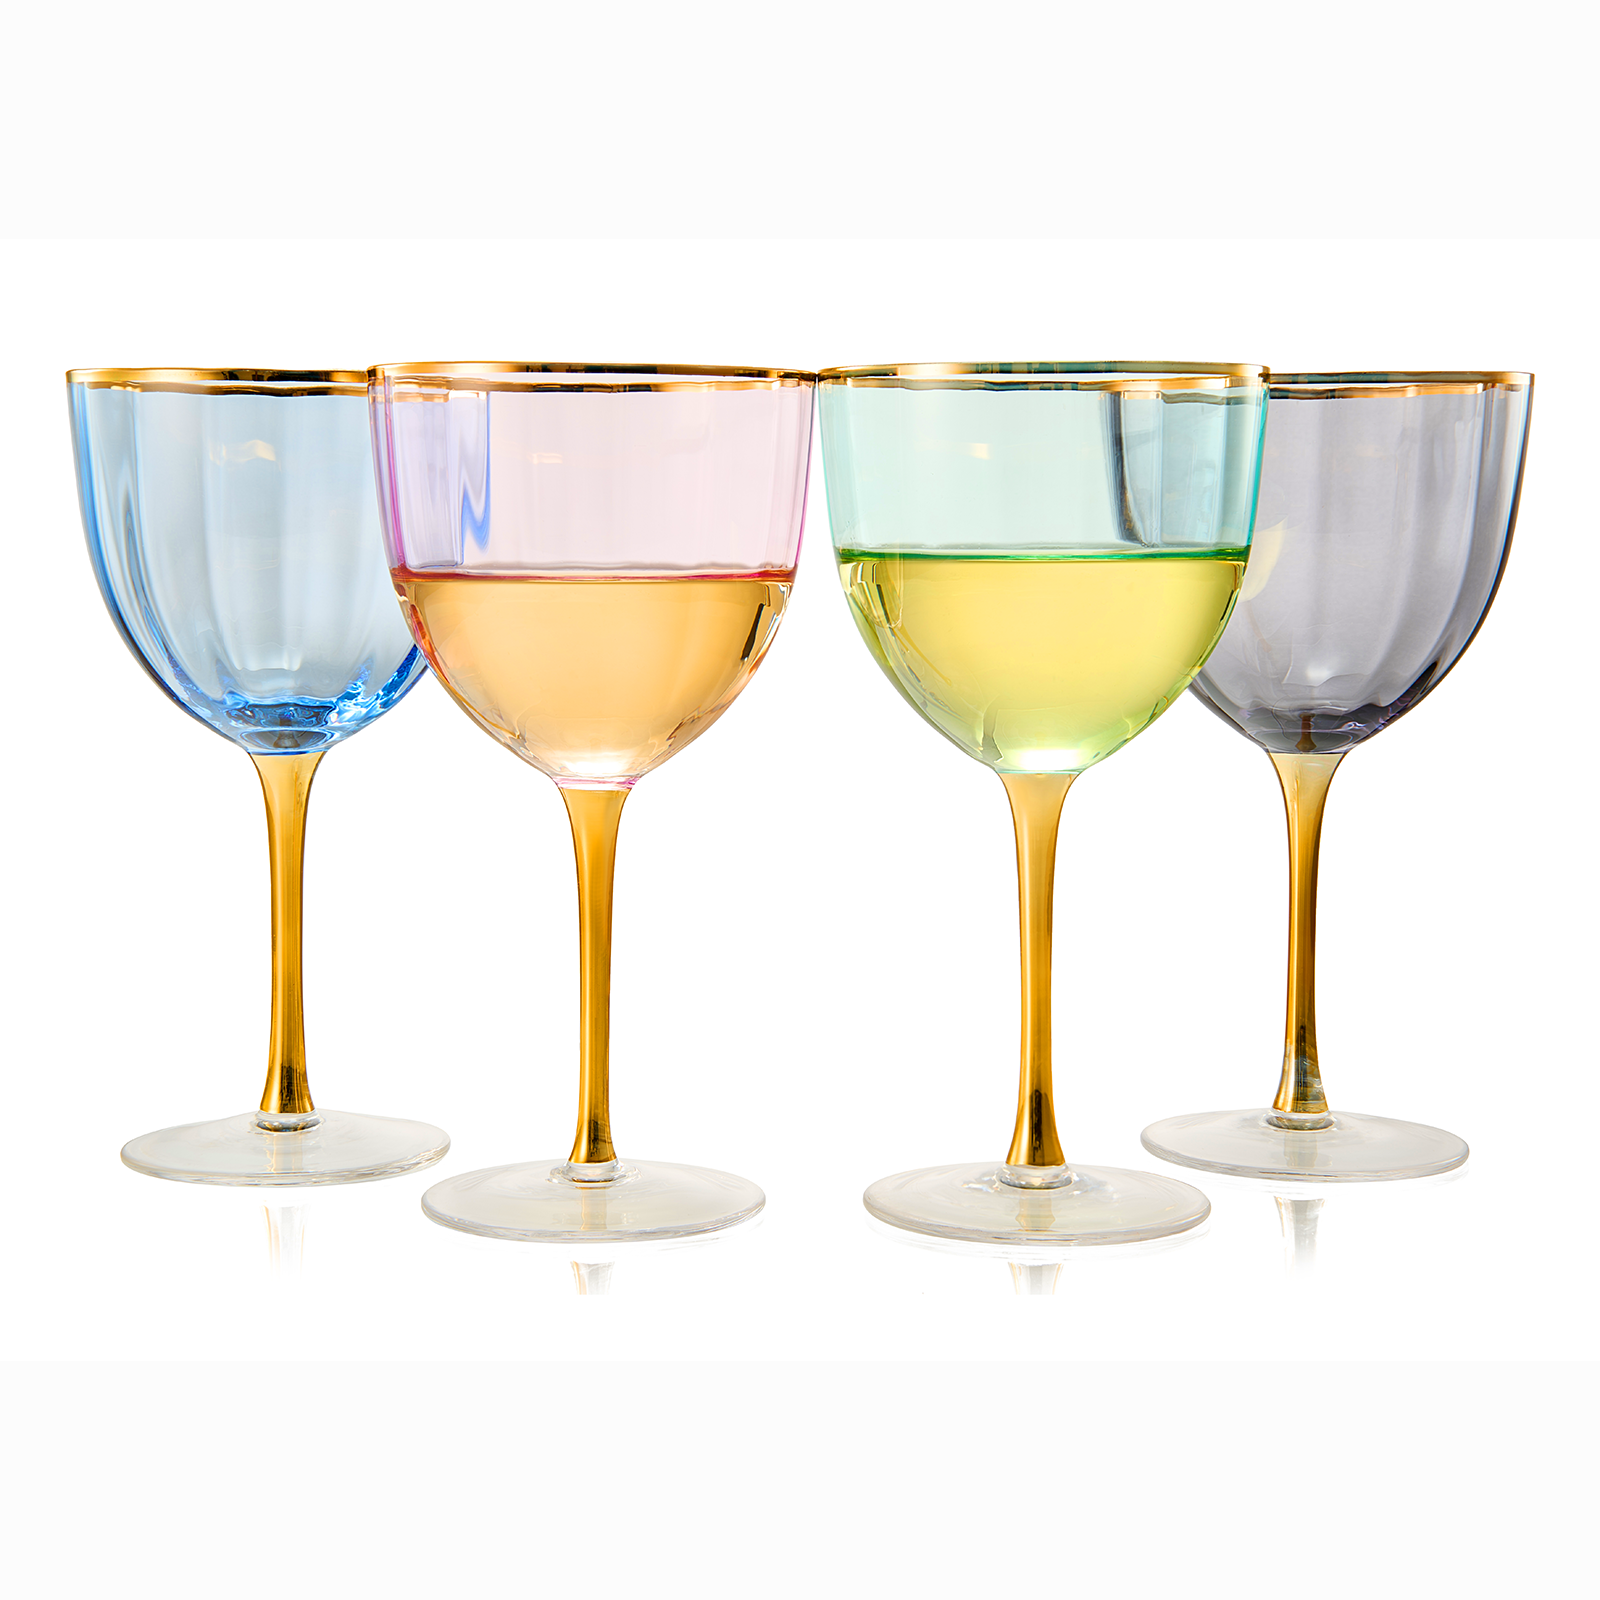 4 glass wine glasses Crystal glass wine glasses Tall glass mixers